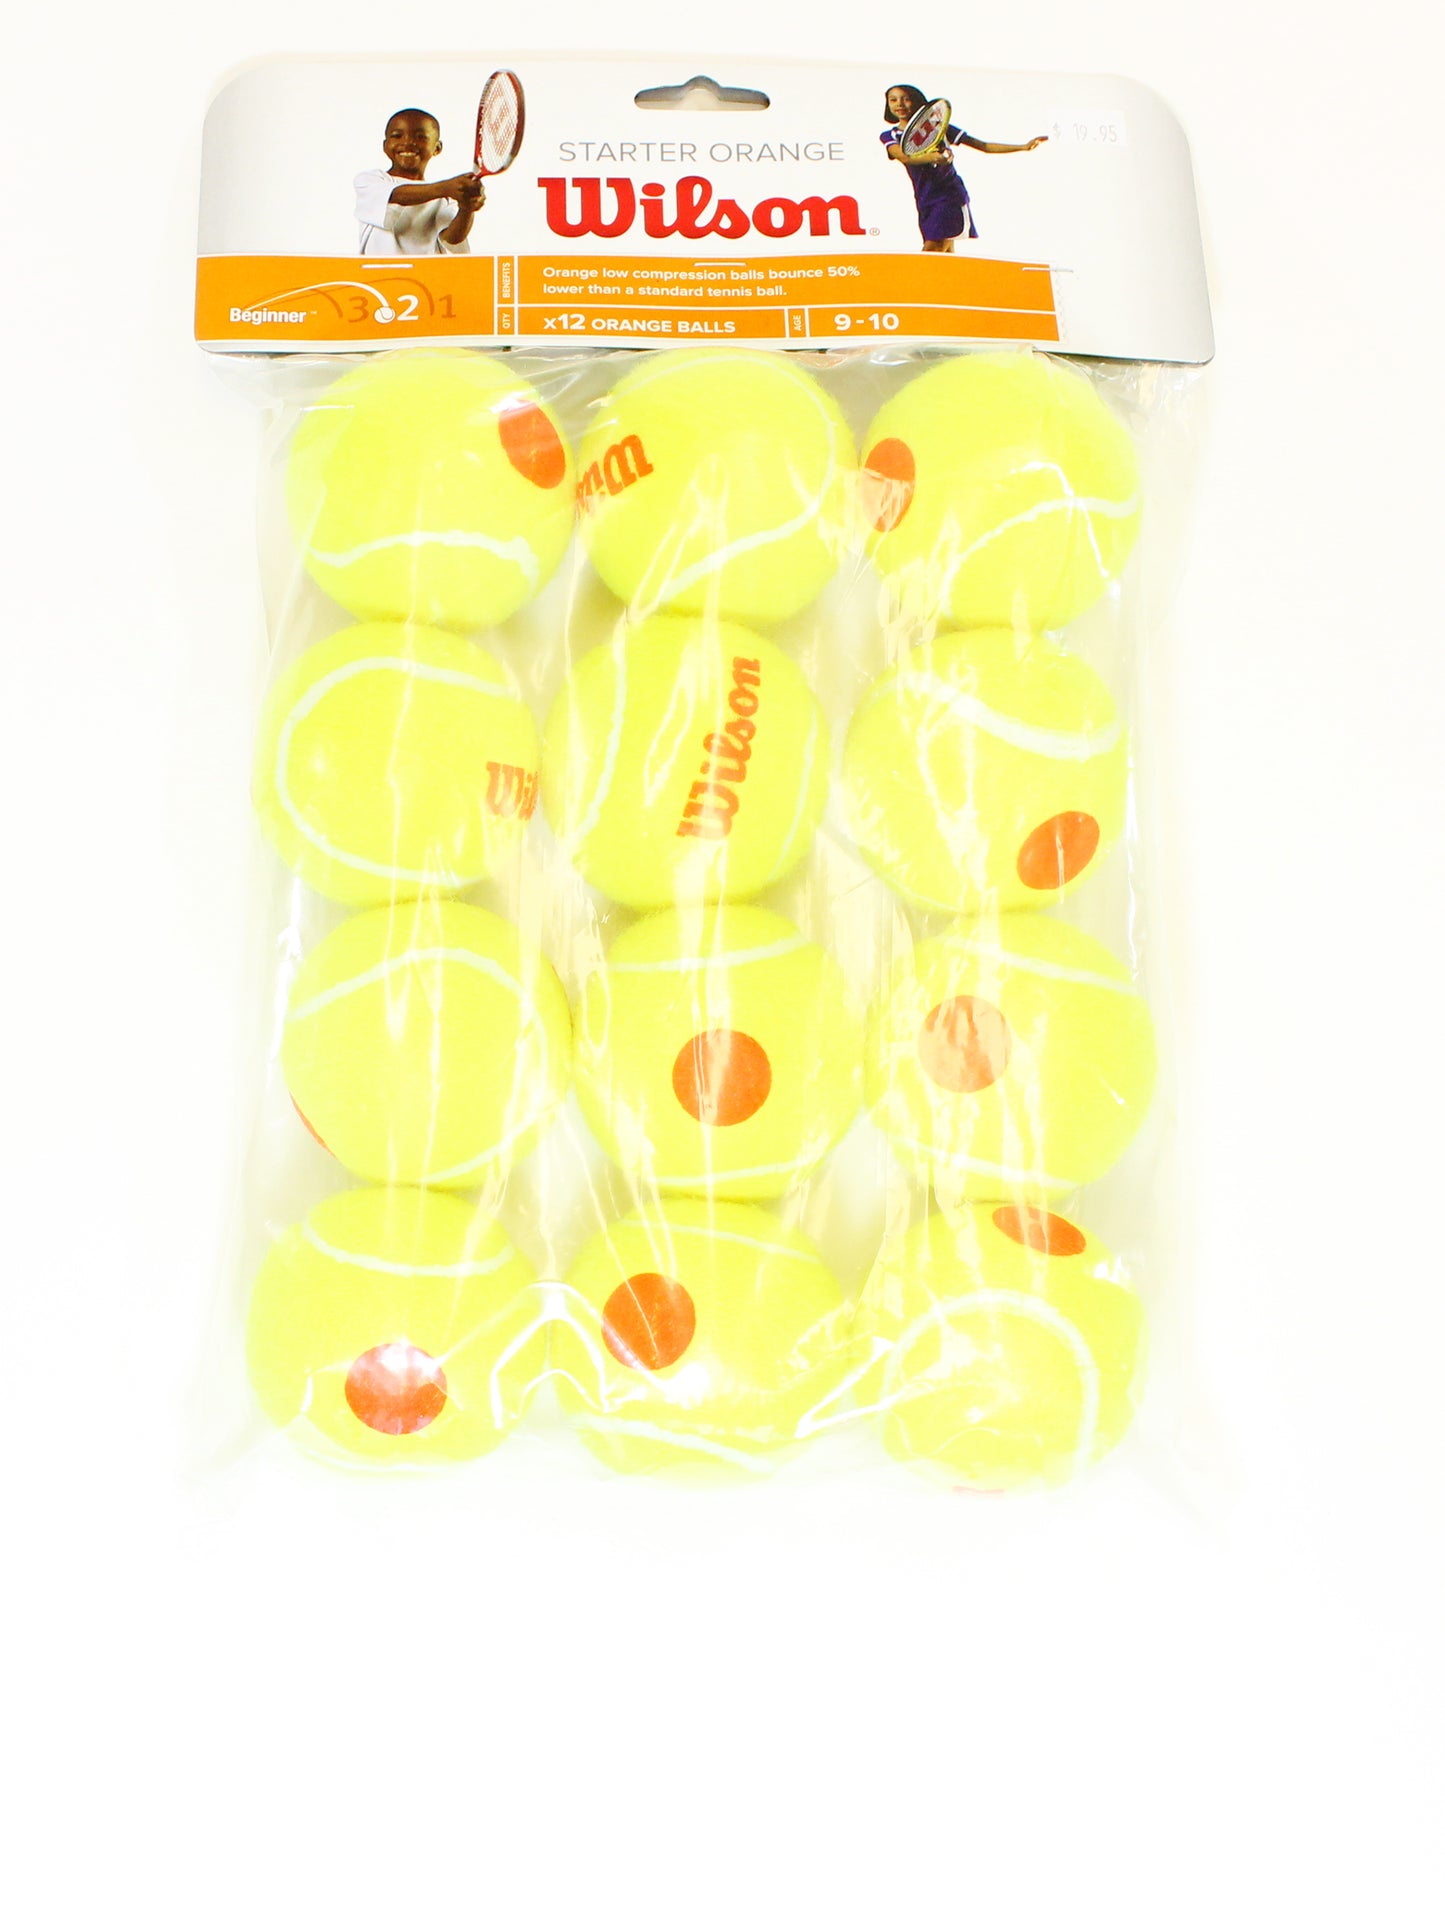 Wilson balls Starter Game Orange (packet of 12)